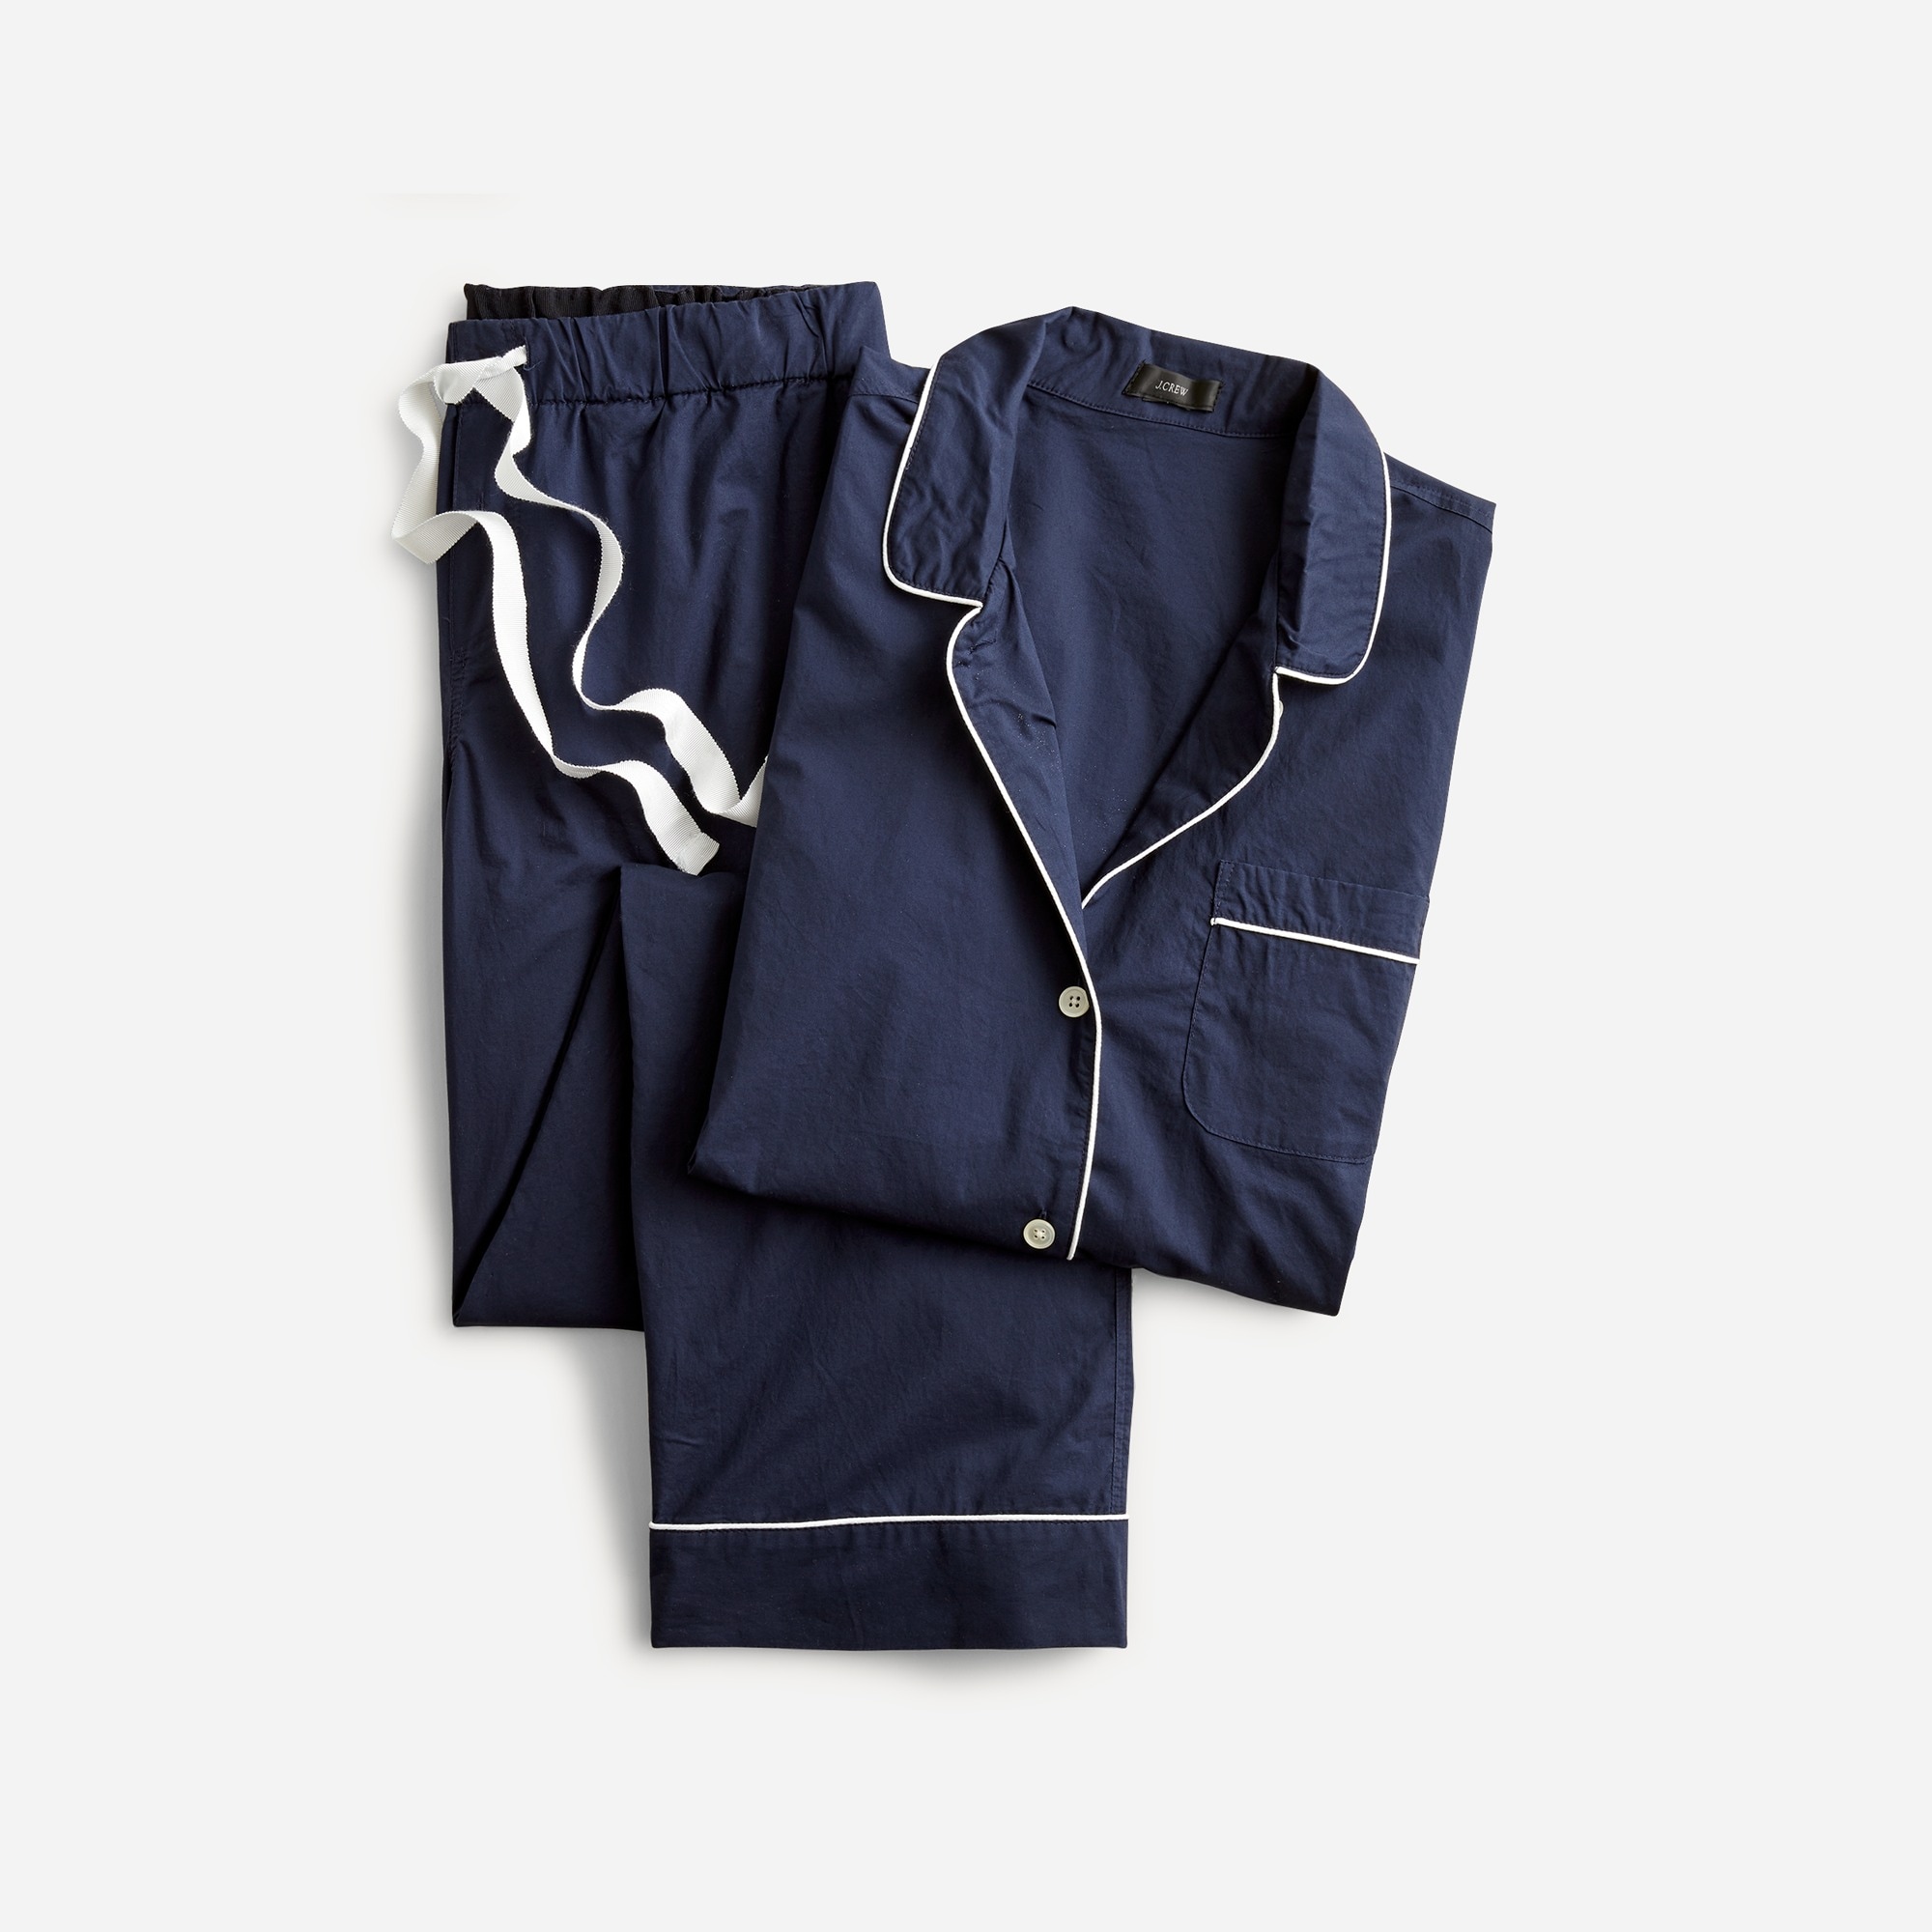 Just Love Women's Thermal Underwear Pajamas Set (Navy, Medium) 